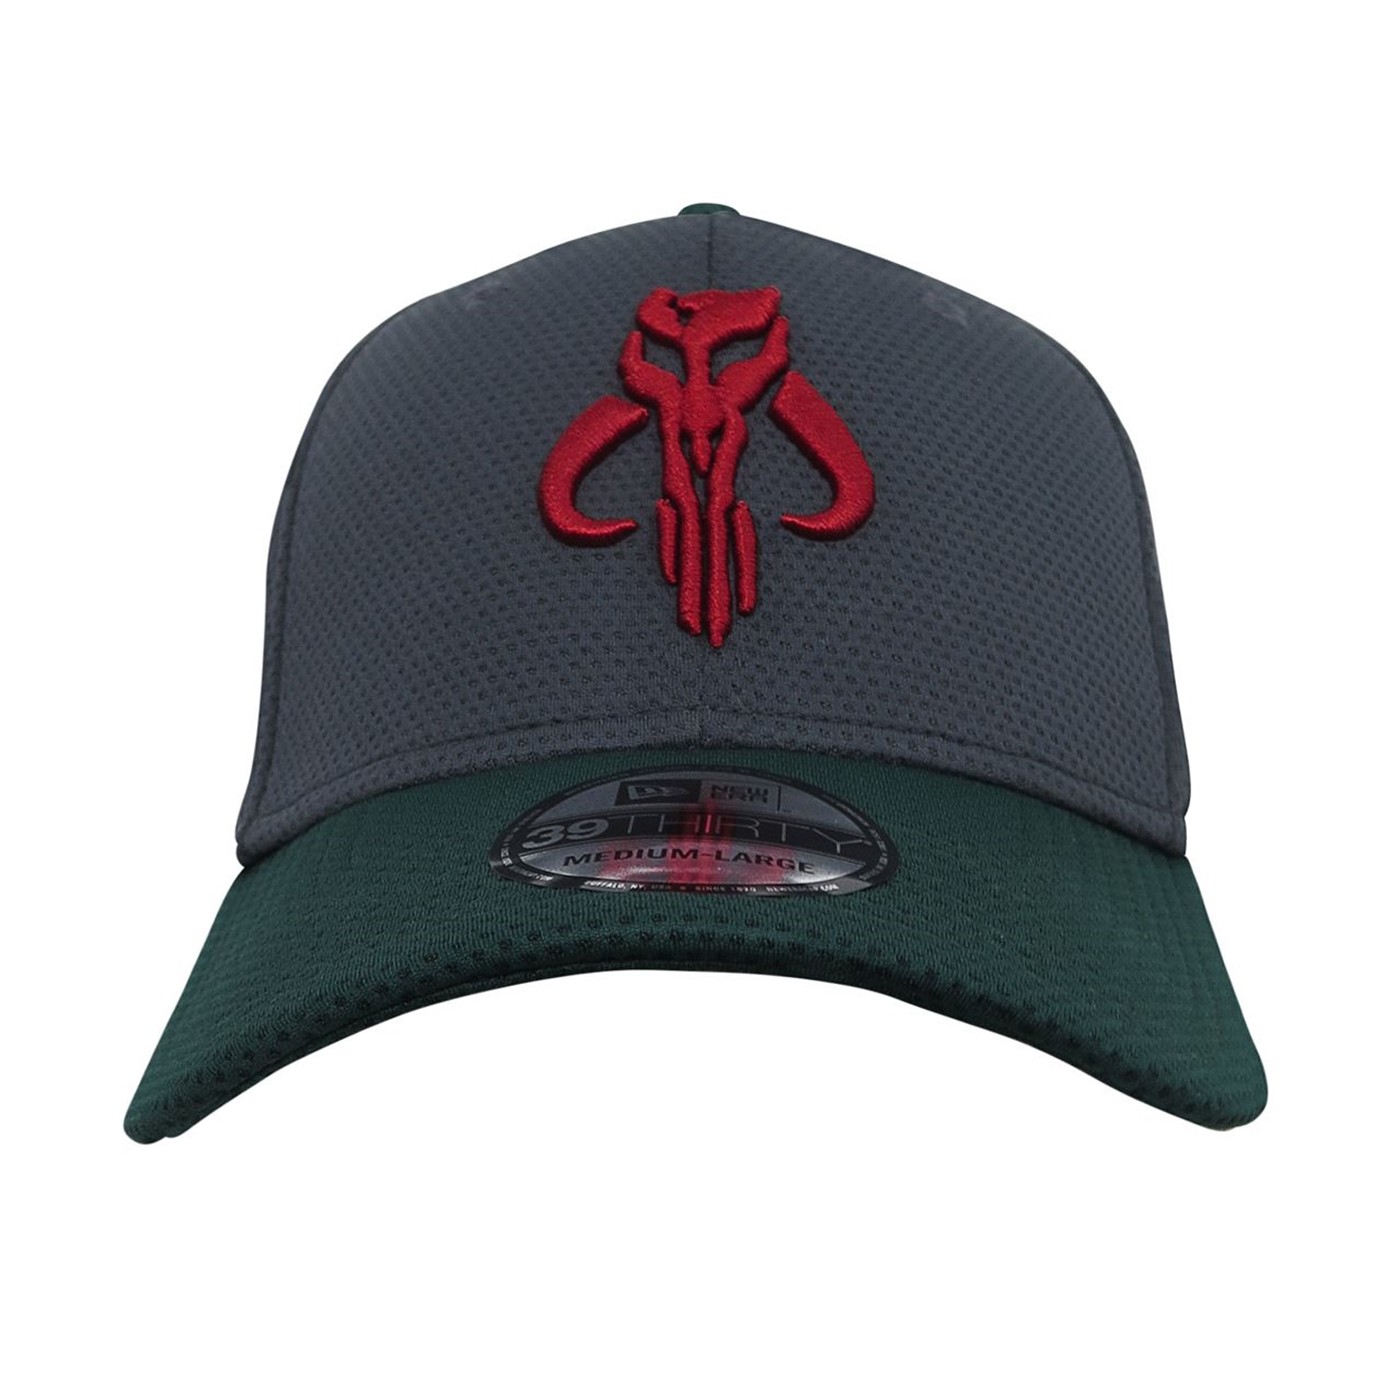 Star Wars Boba Fett Mandalorian 39Thirty Fitted Hat